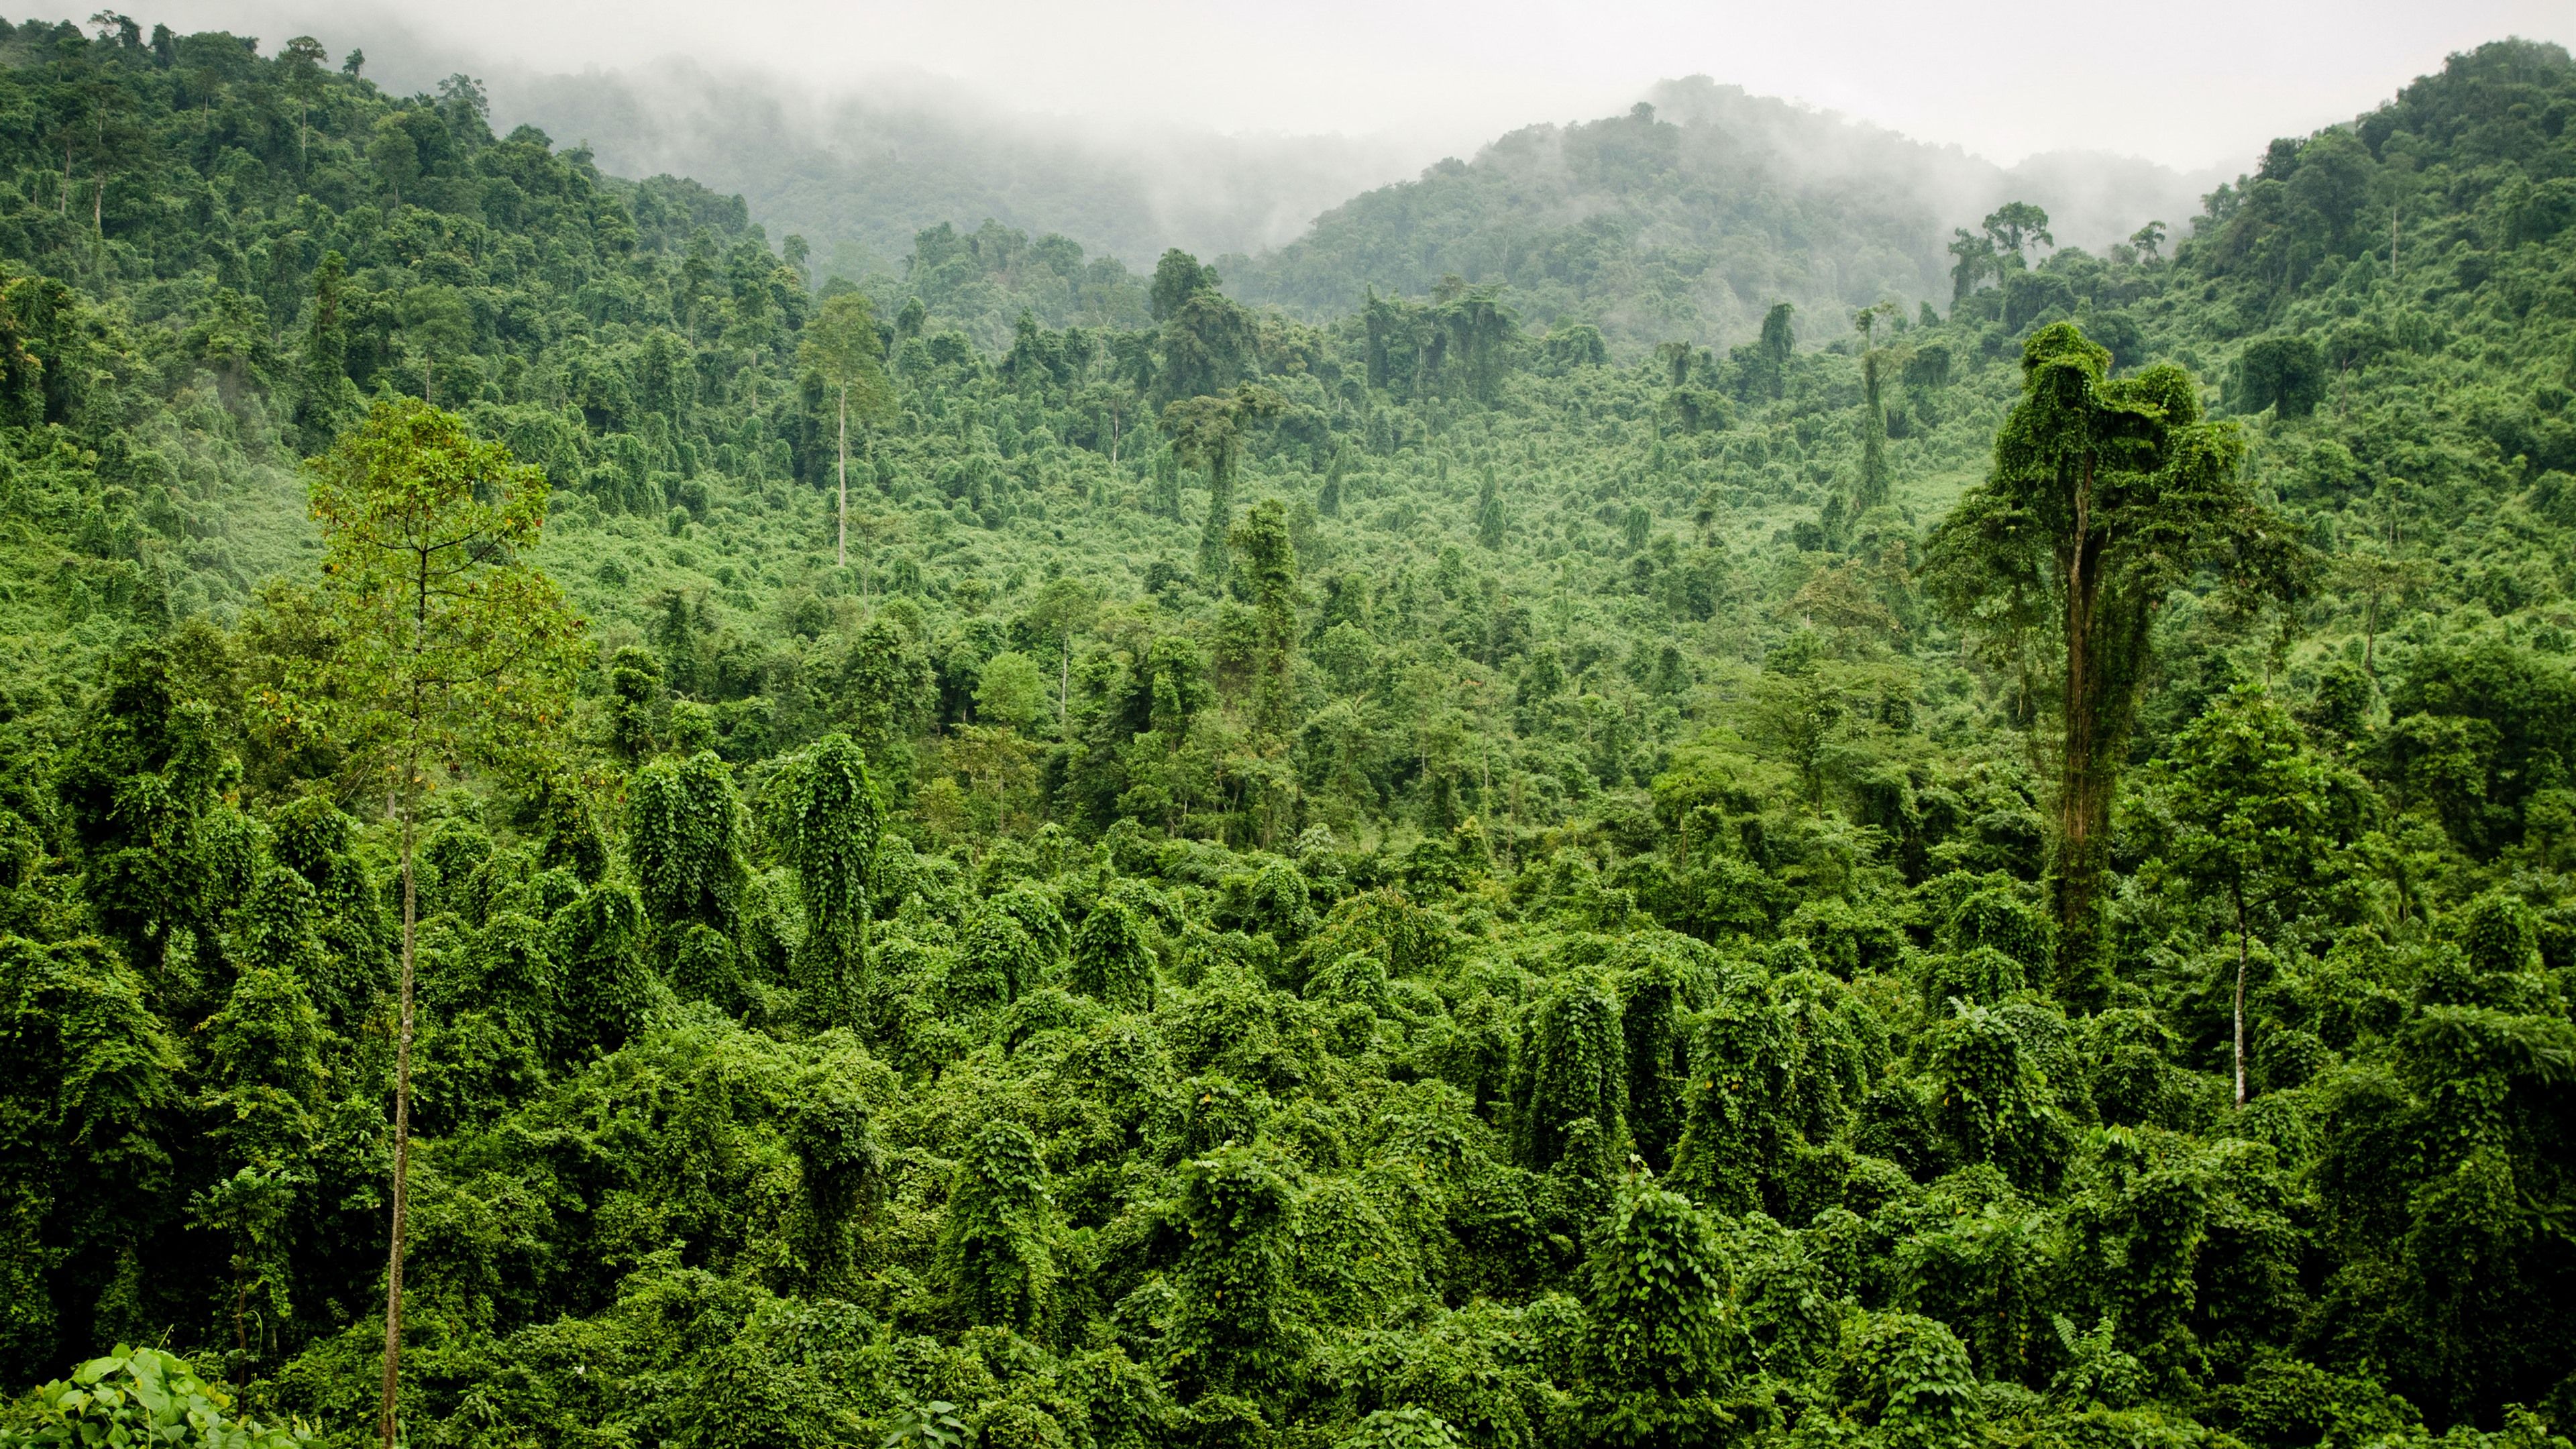 Dschungel Hintergrundbild 3840x2160. Dschungel, tropisch, Wald, Bäume, grün 3840x2160 UHD 4K Hintergrundbilder, HD, Bild